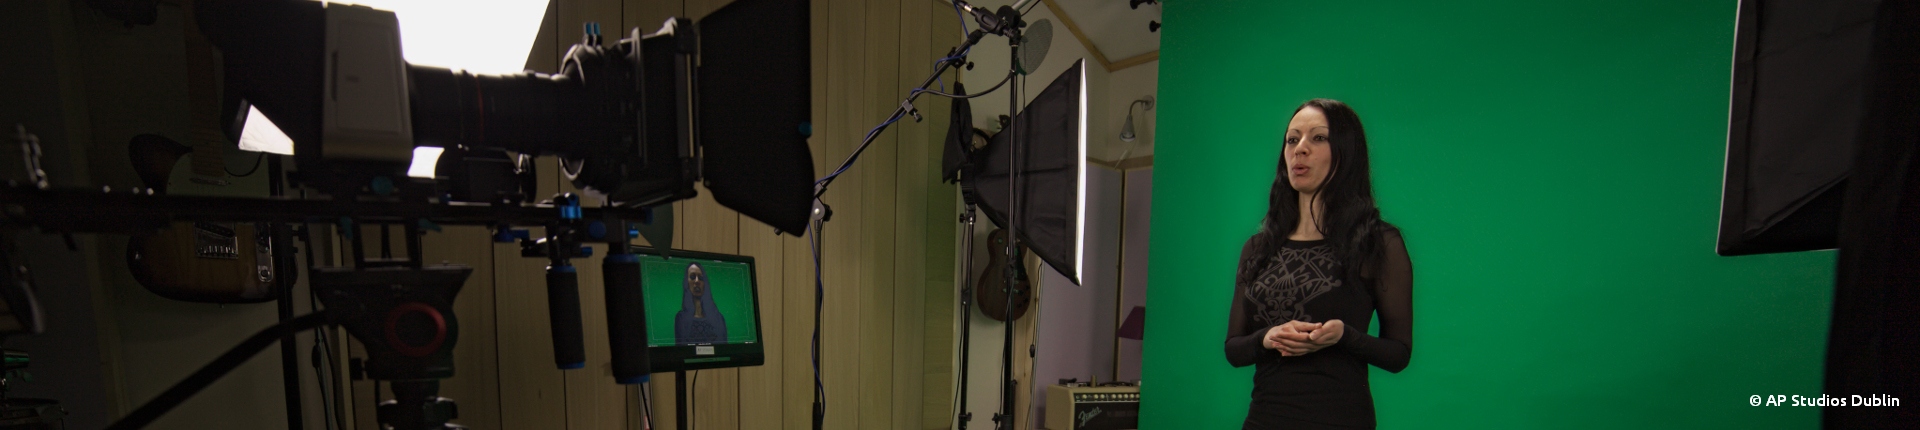 AP Recording Studios Green Screen Chroma Key 4k Raw Video